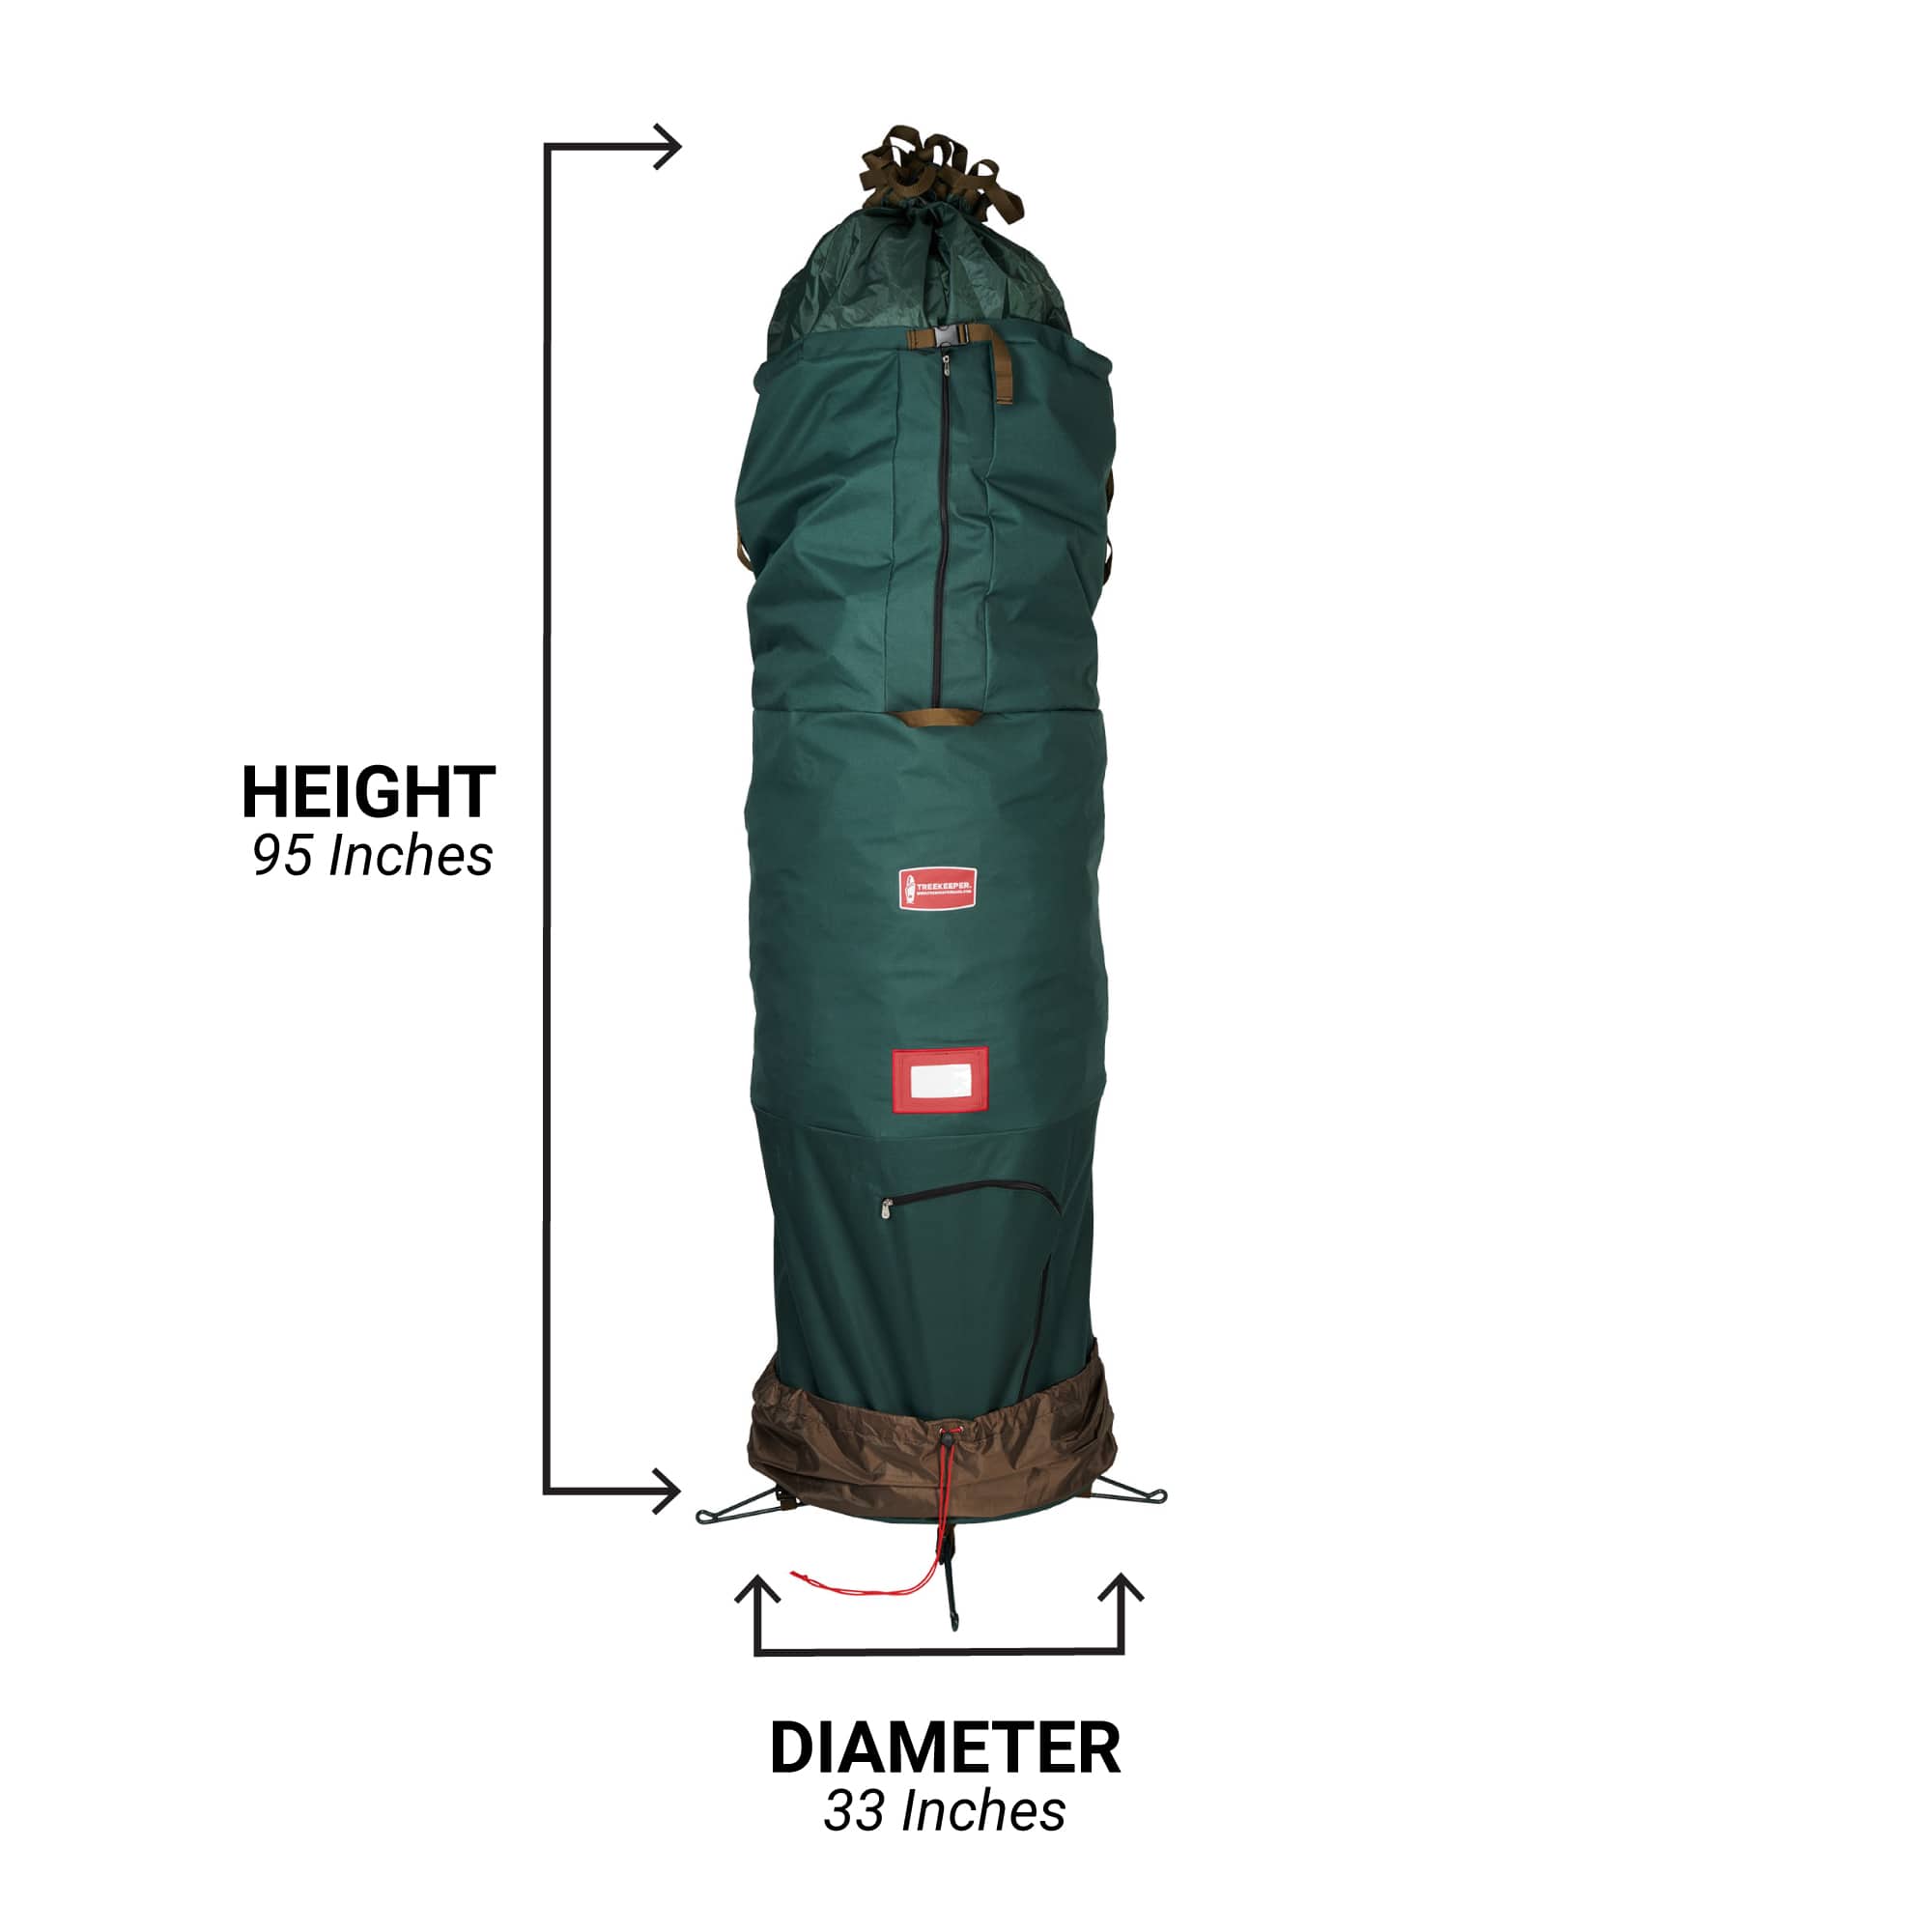 TreeKeeper 7-9ft. Large Upright Tree Storage Bag